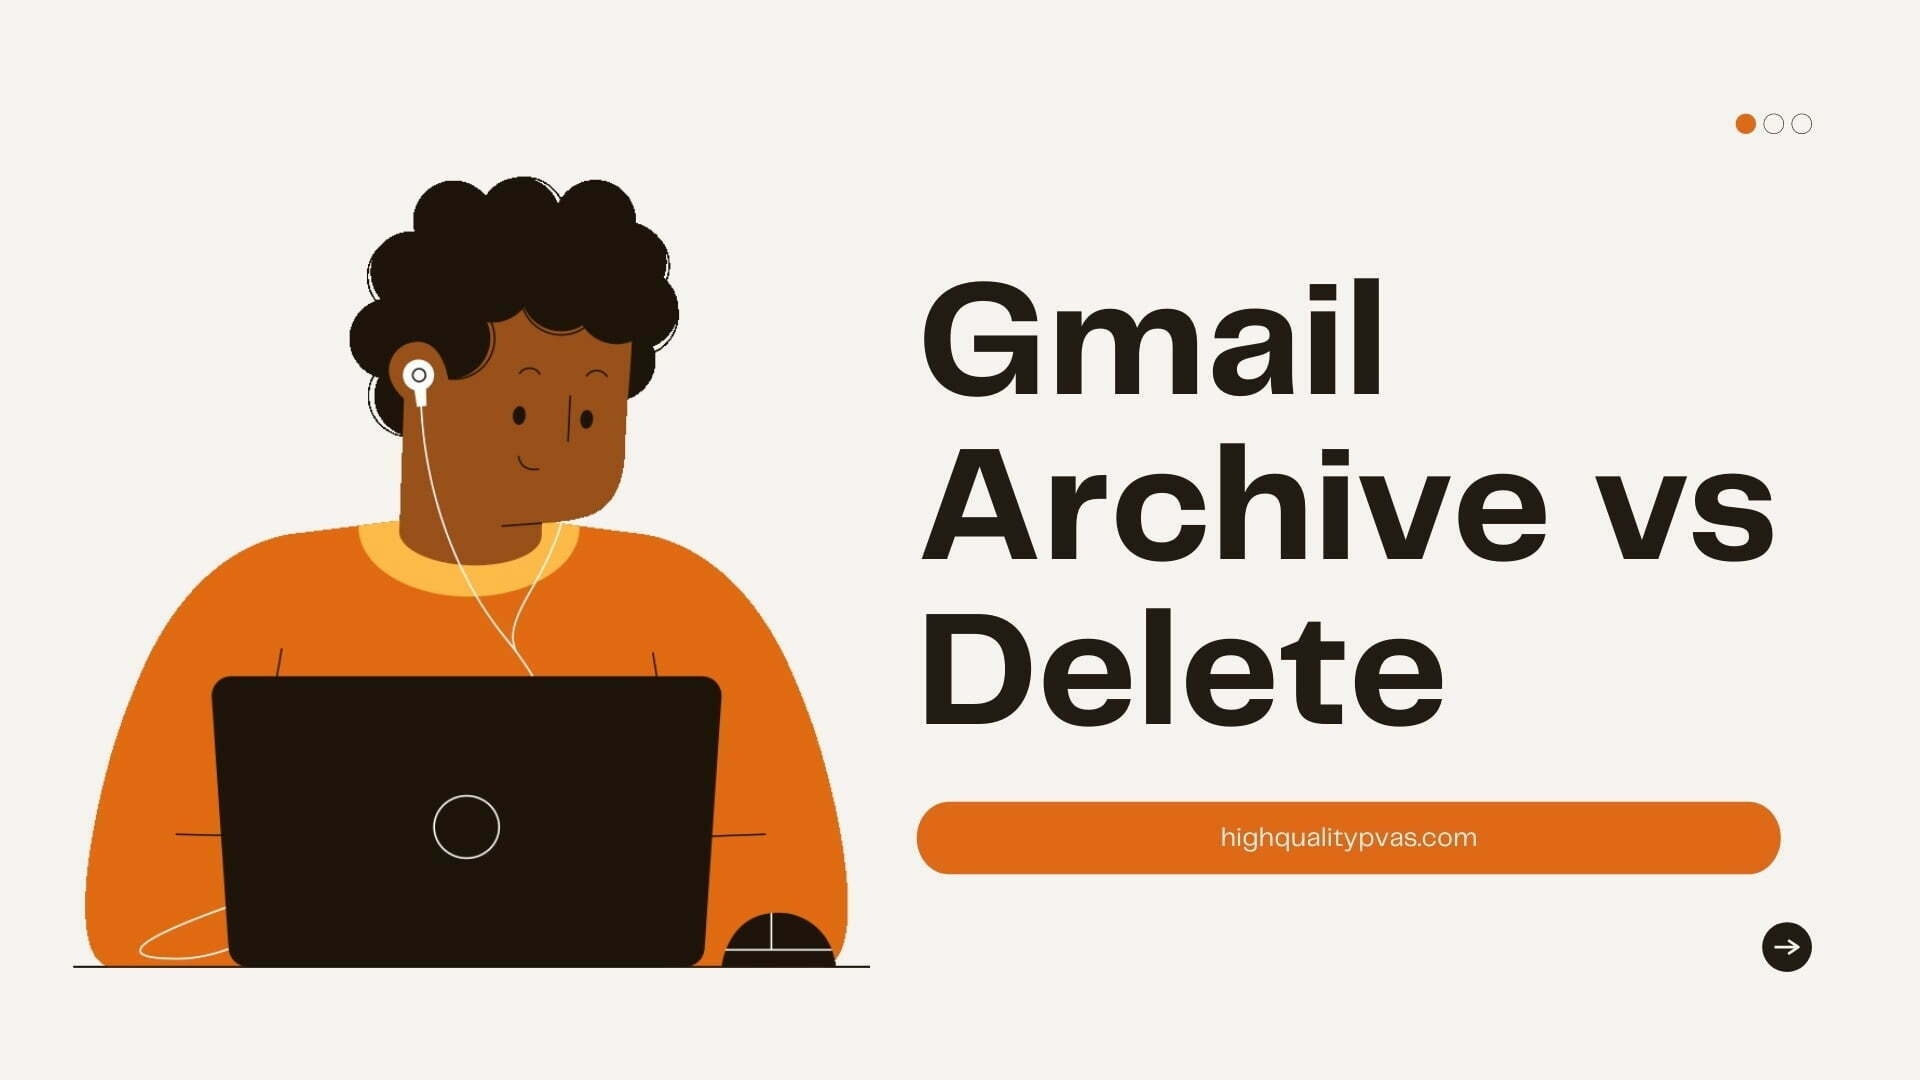 Gmail Archive vs Delete